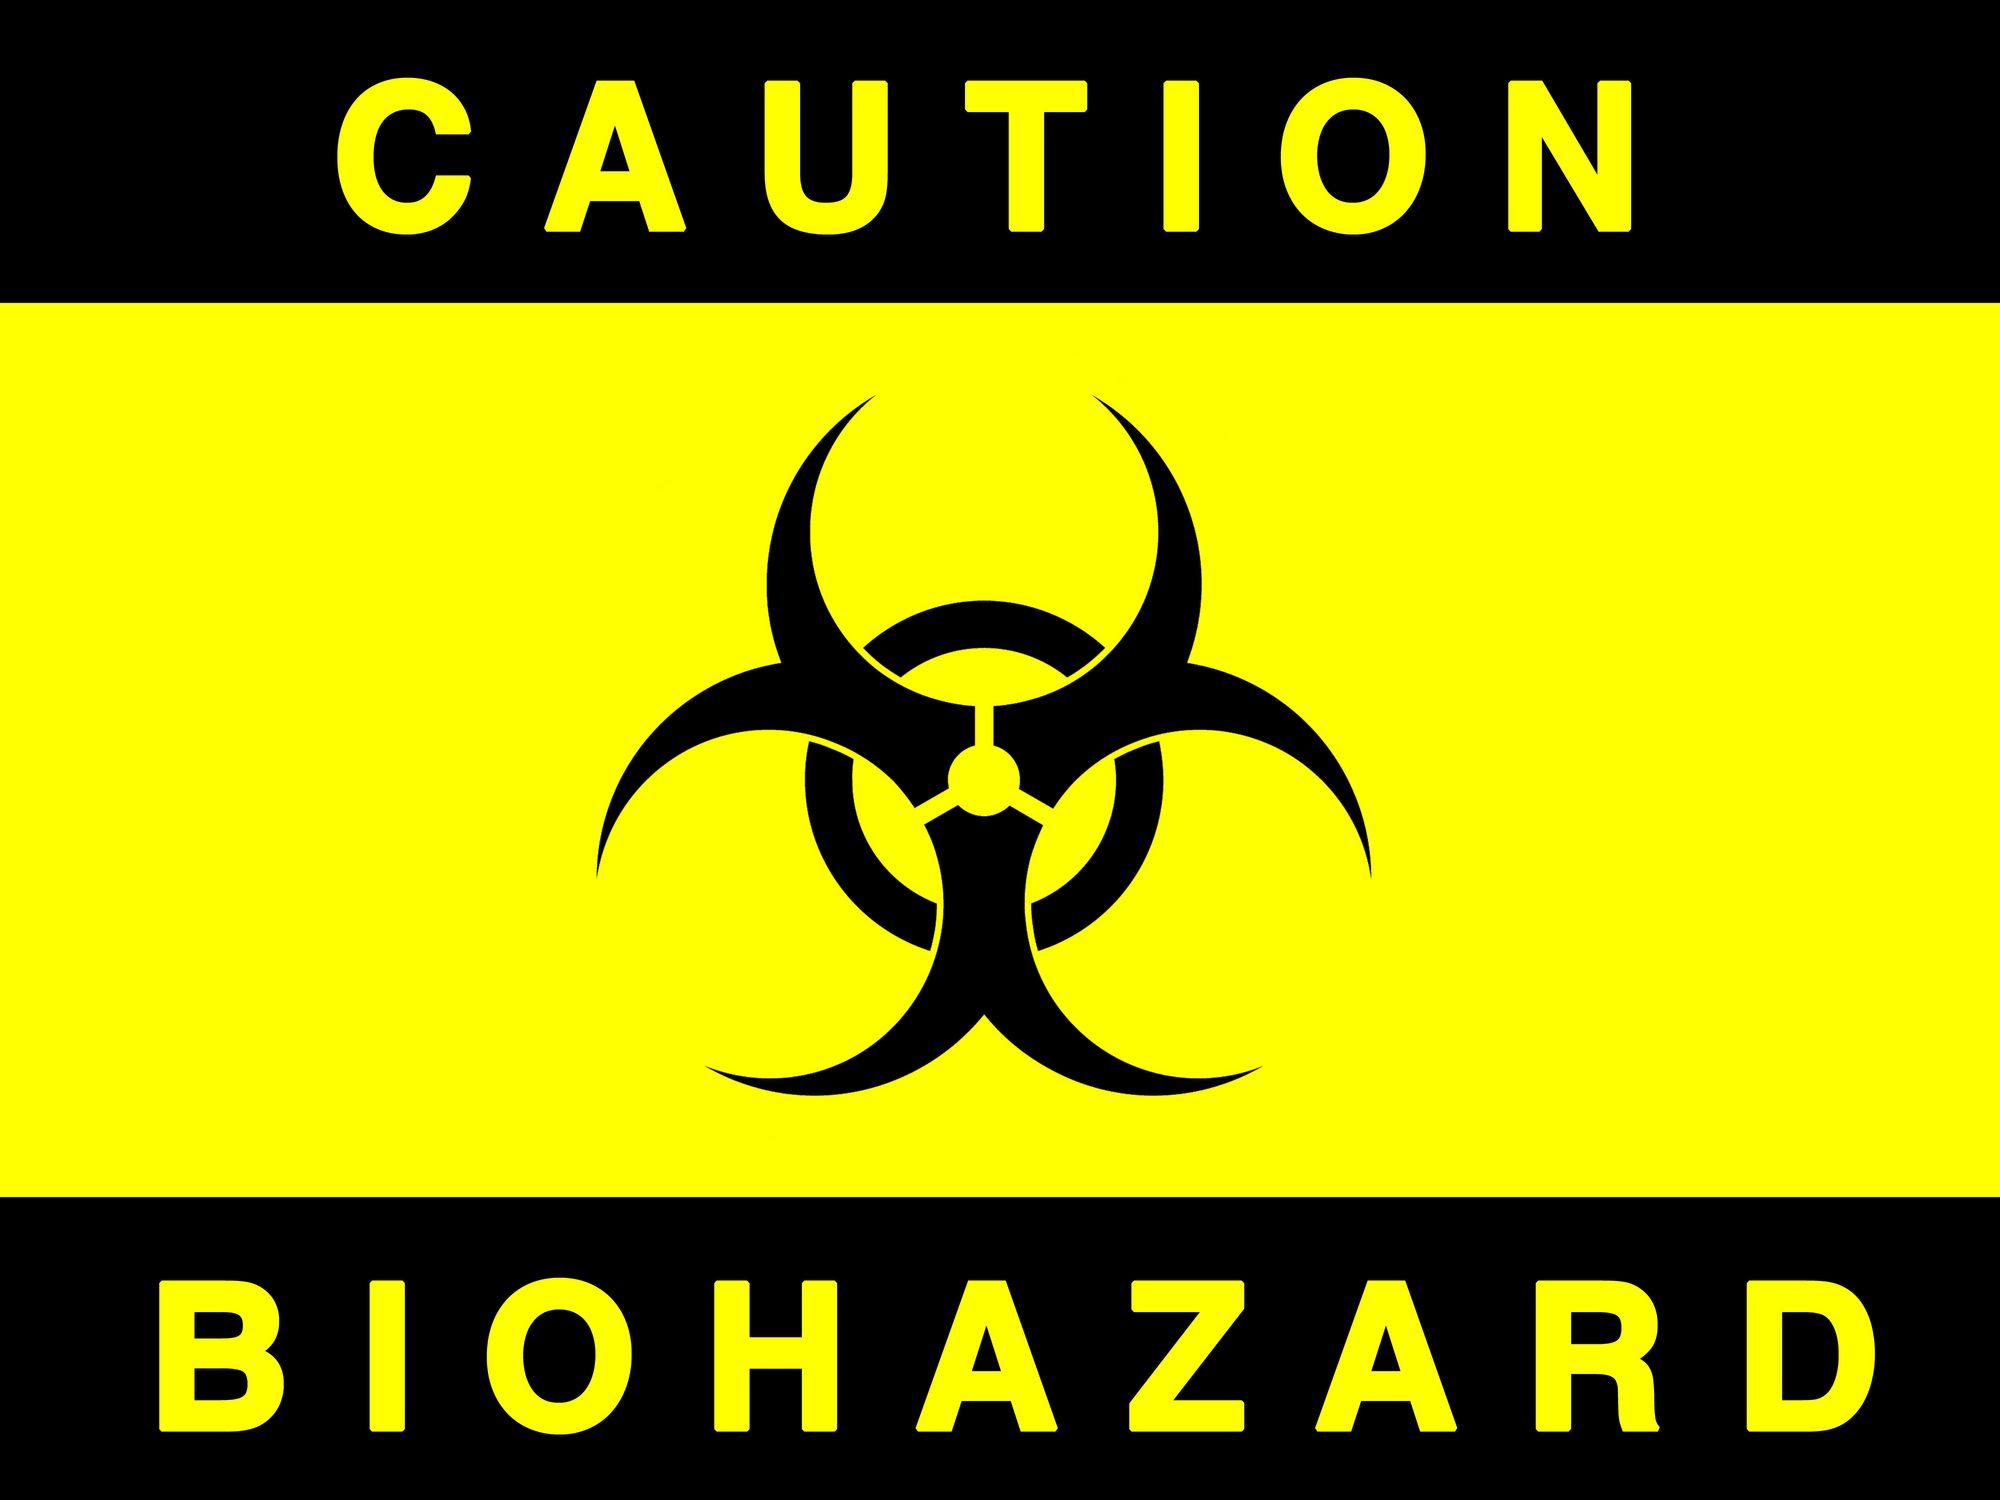 Biohazard: It&;s about people not resumés